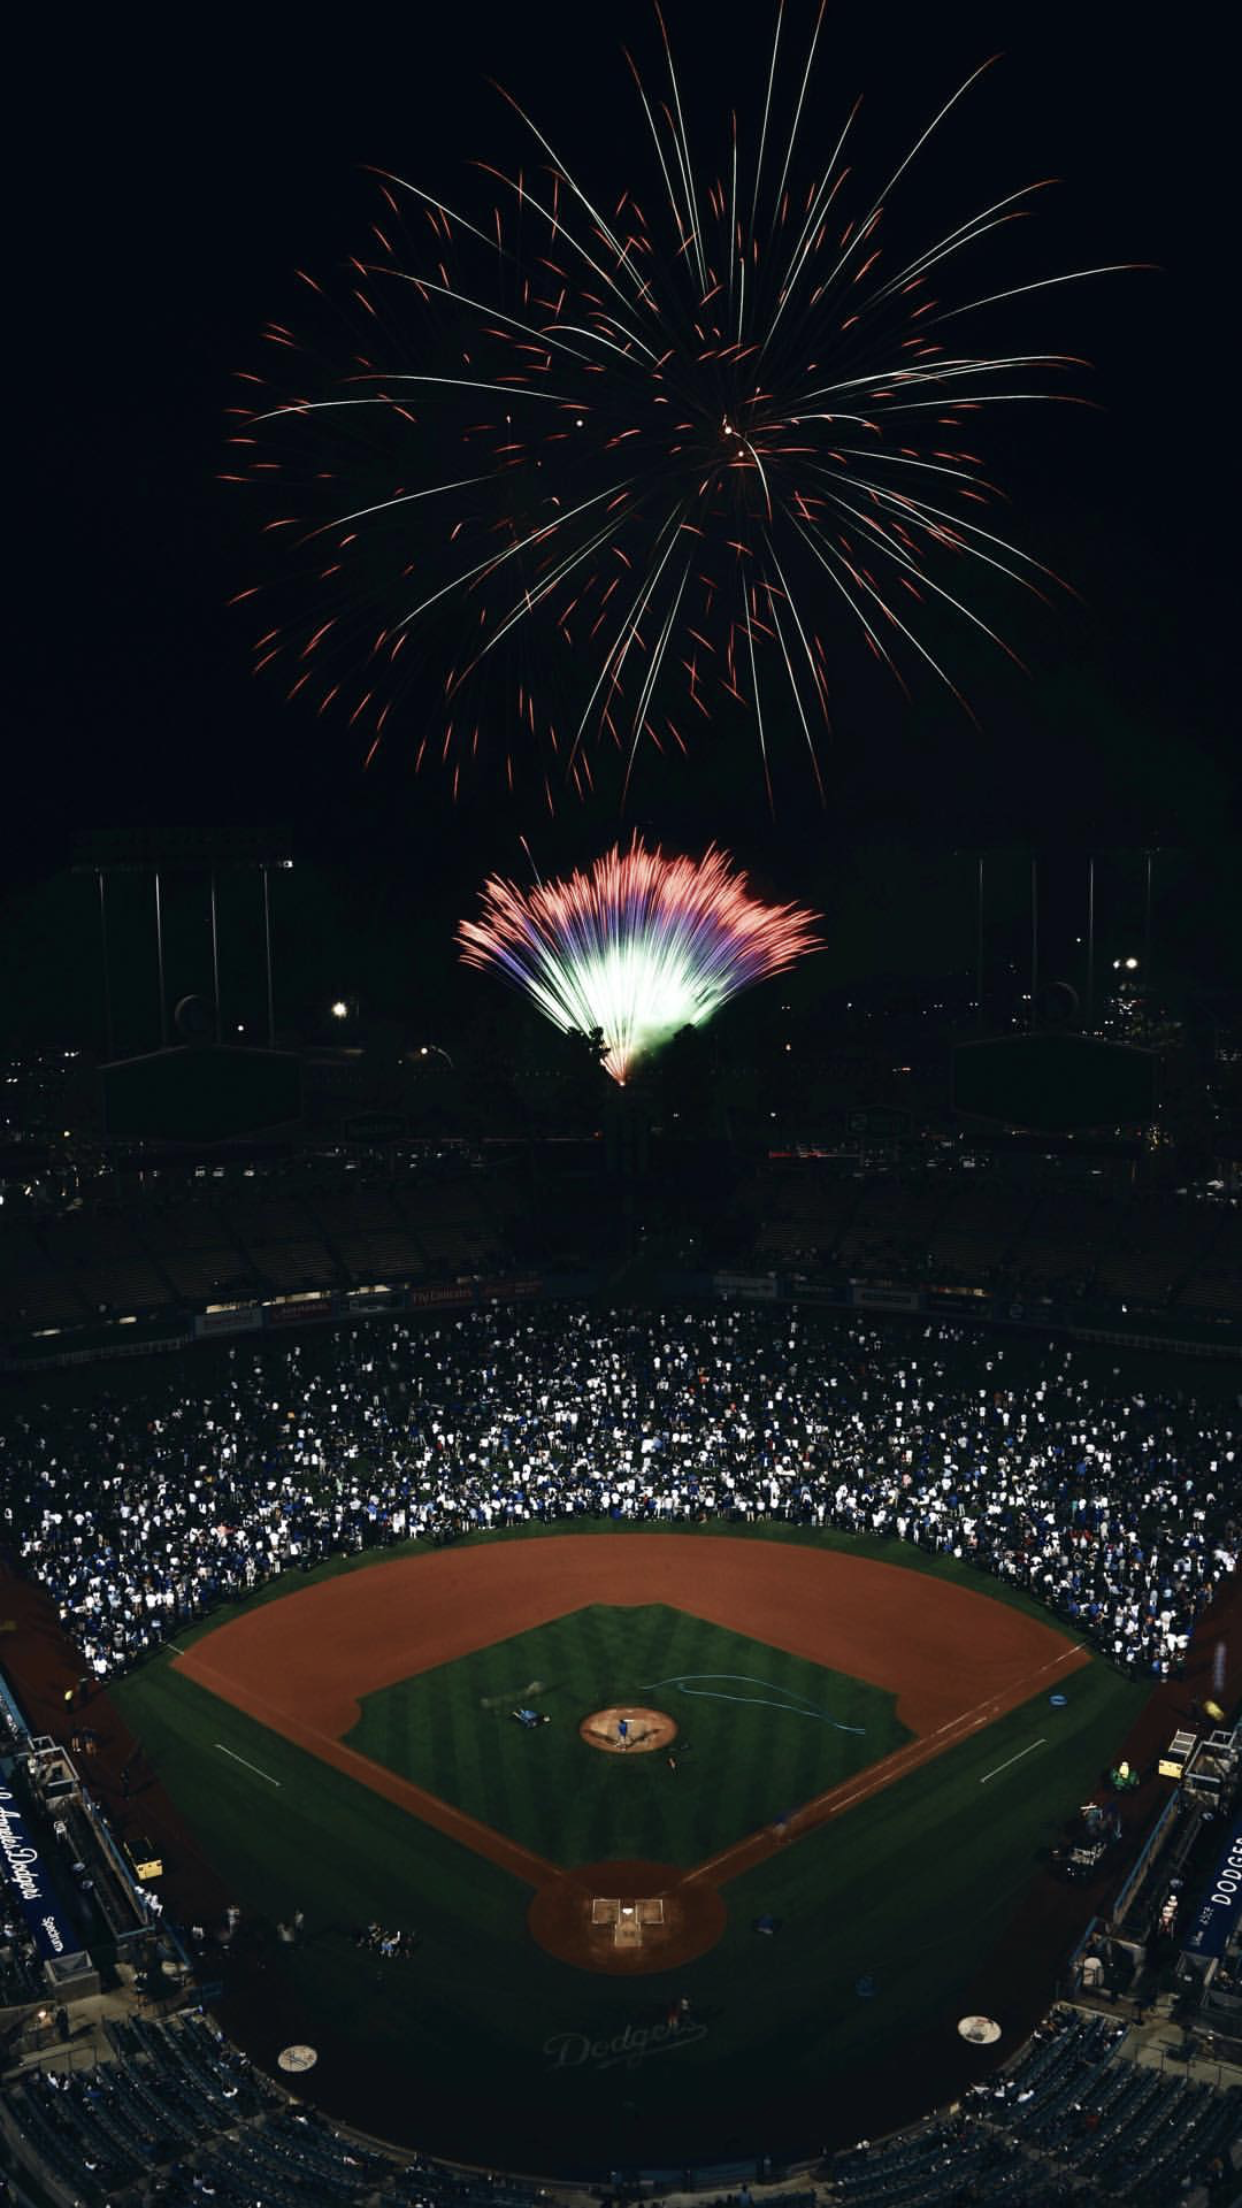 Dodgers Baseball / Chavez Ravine / Fireworks / Wallpaper / photocredit Dodgers Instagram. Baseball wallpaper, Fireworks wallpaper, Baseball